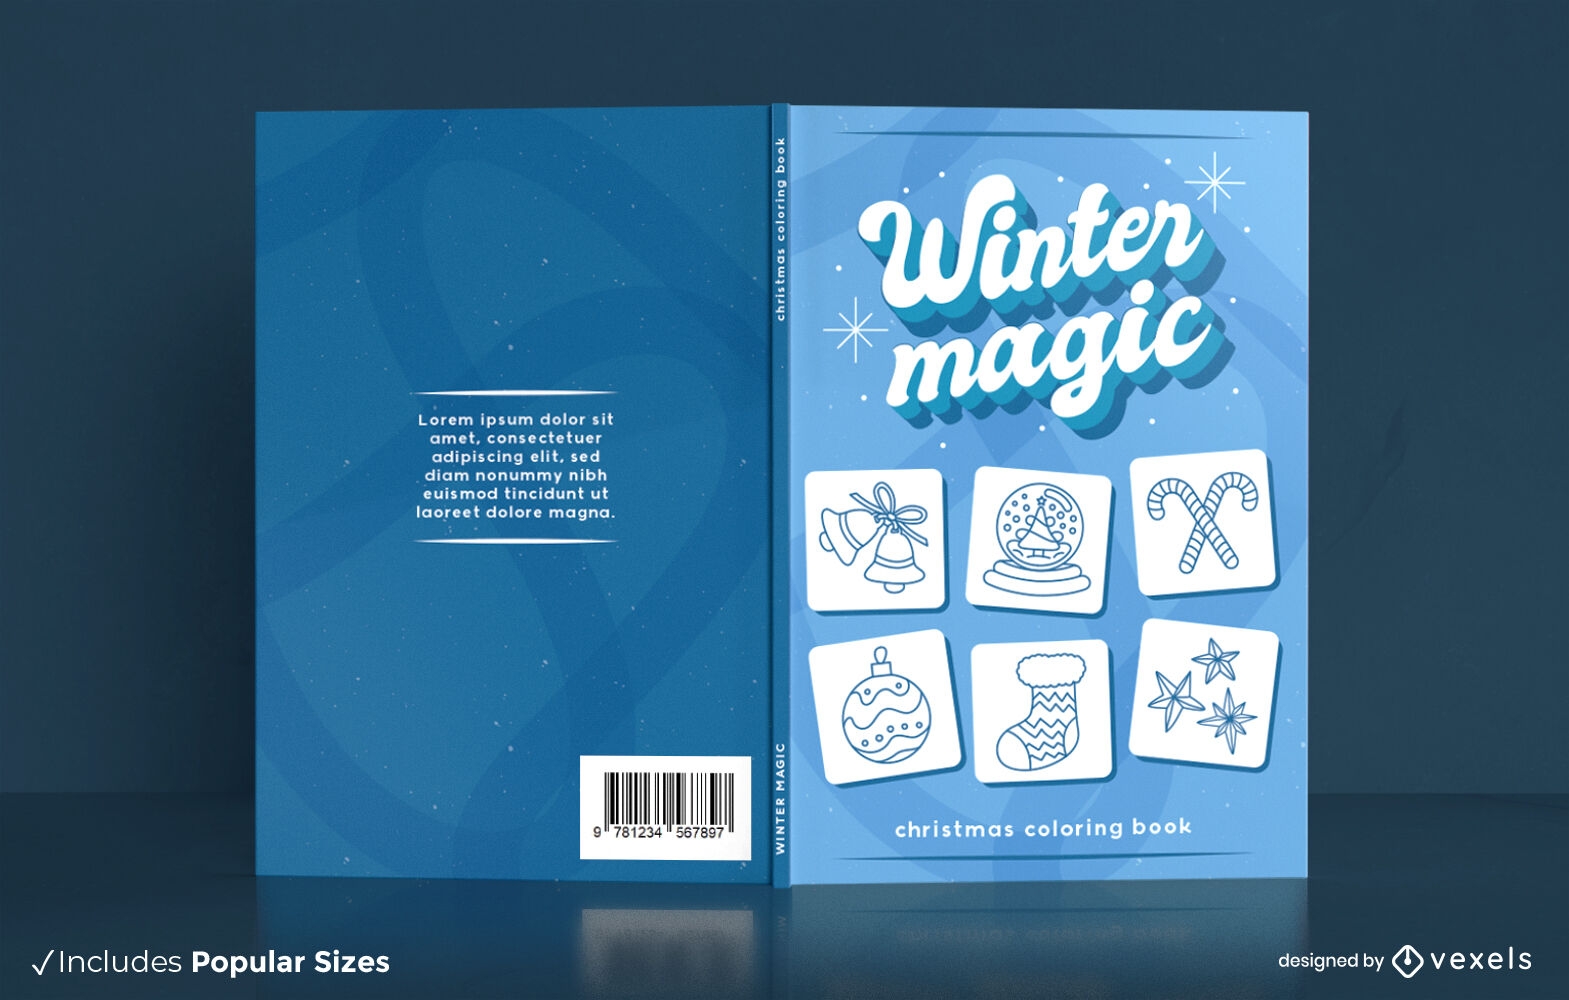 Design de capa de livro para colorir mágico de inverno